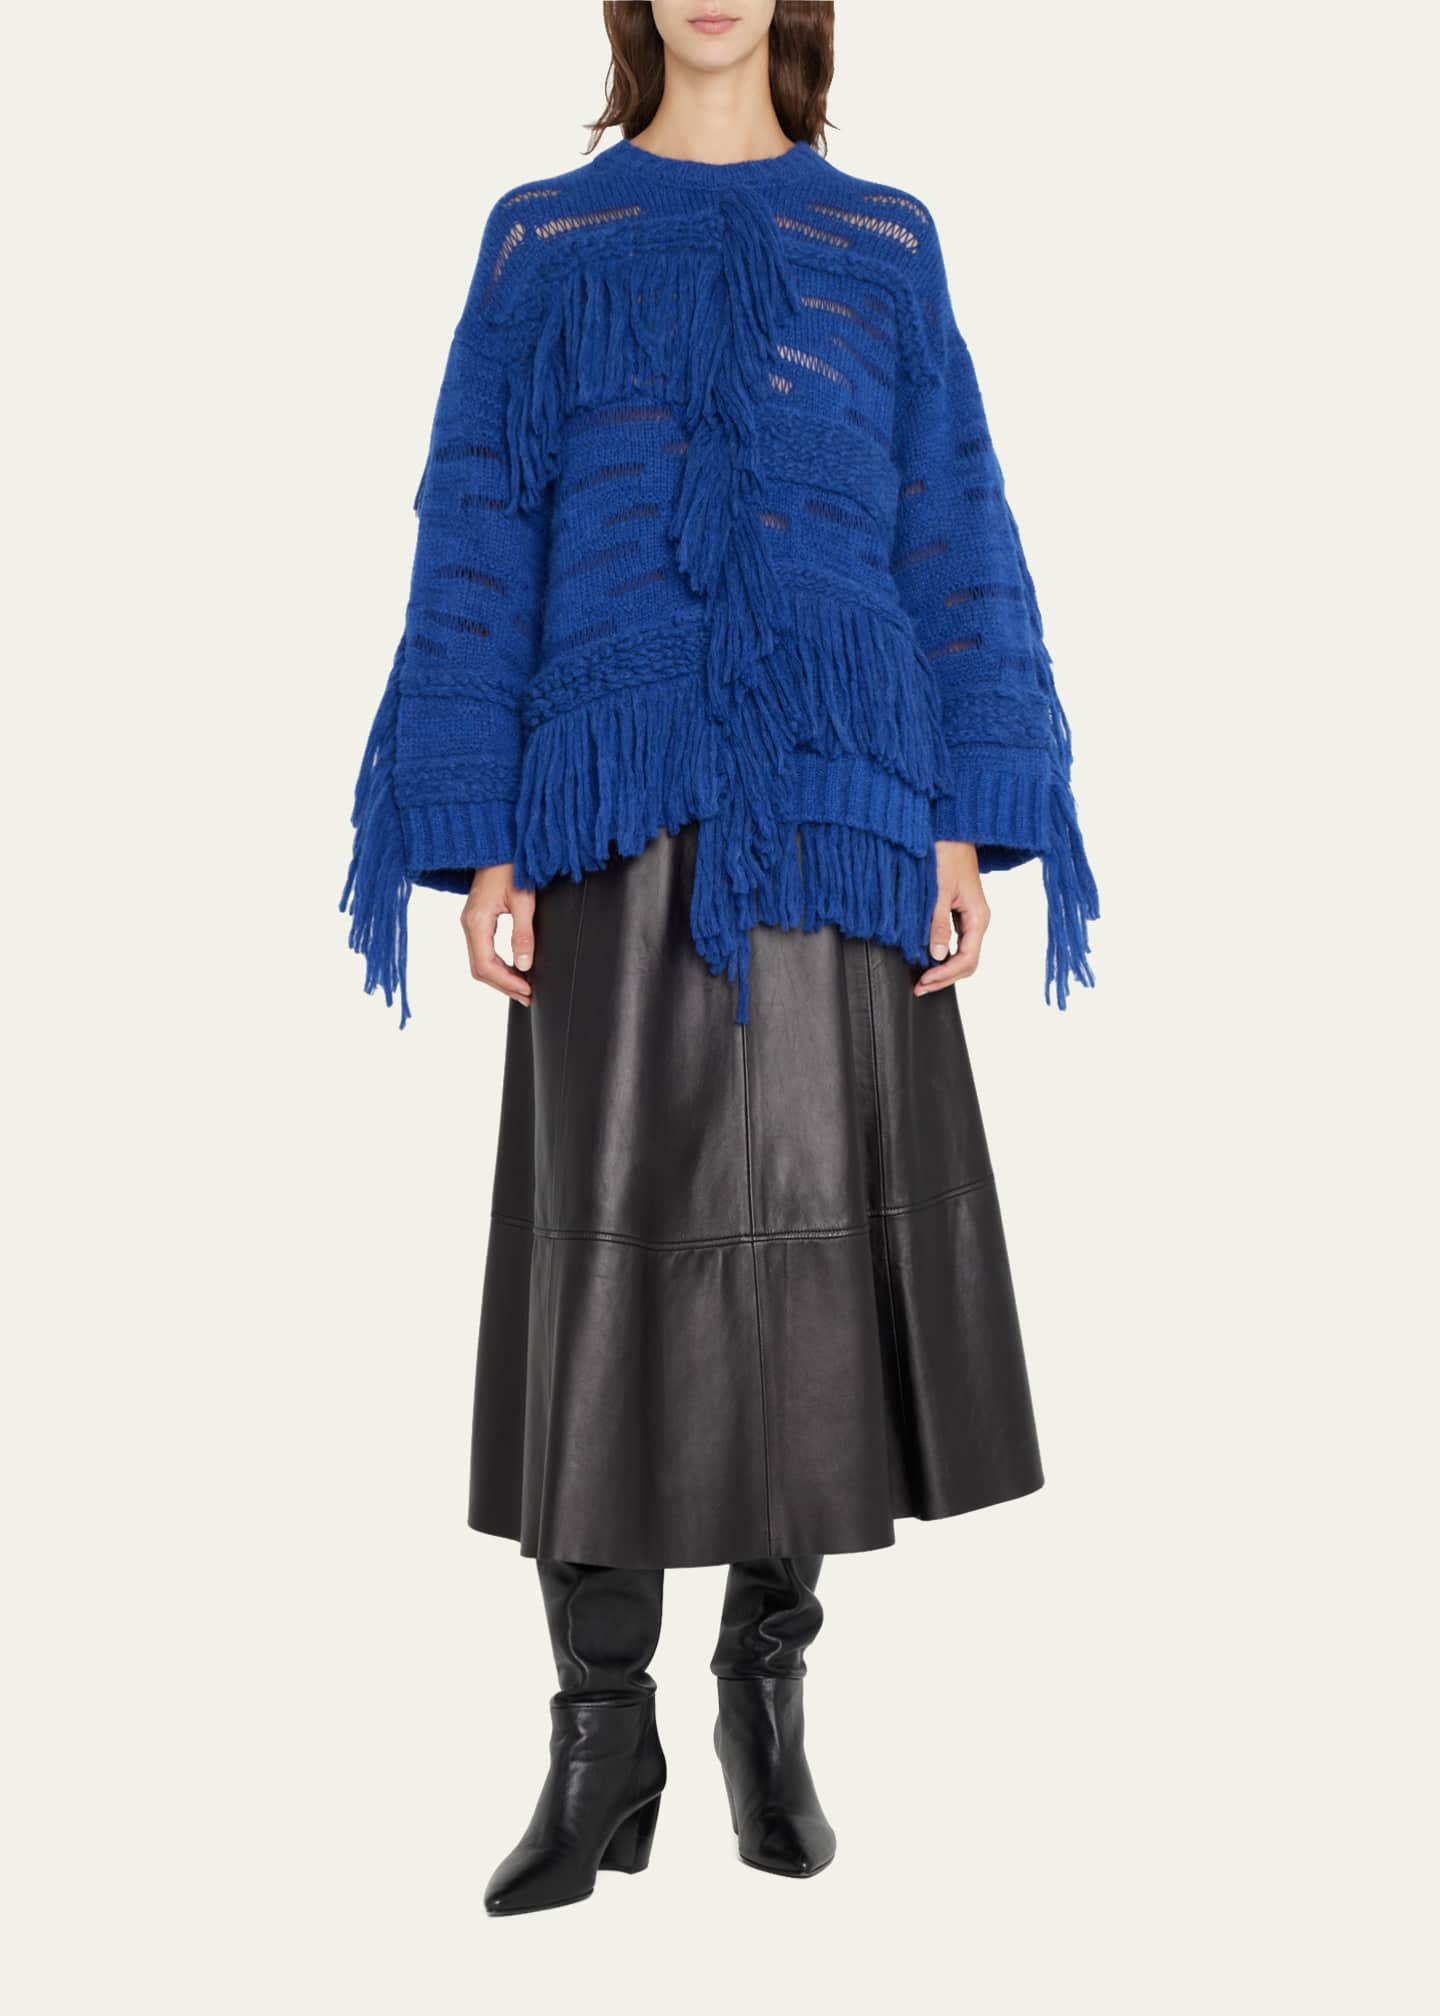 Stella McCartney Fringe Oversized Wool Sweater - Bergdorf Goodman